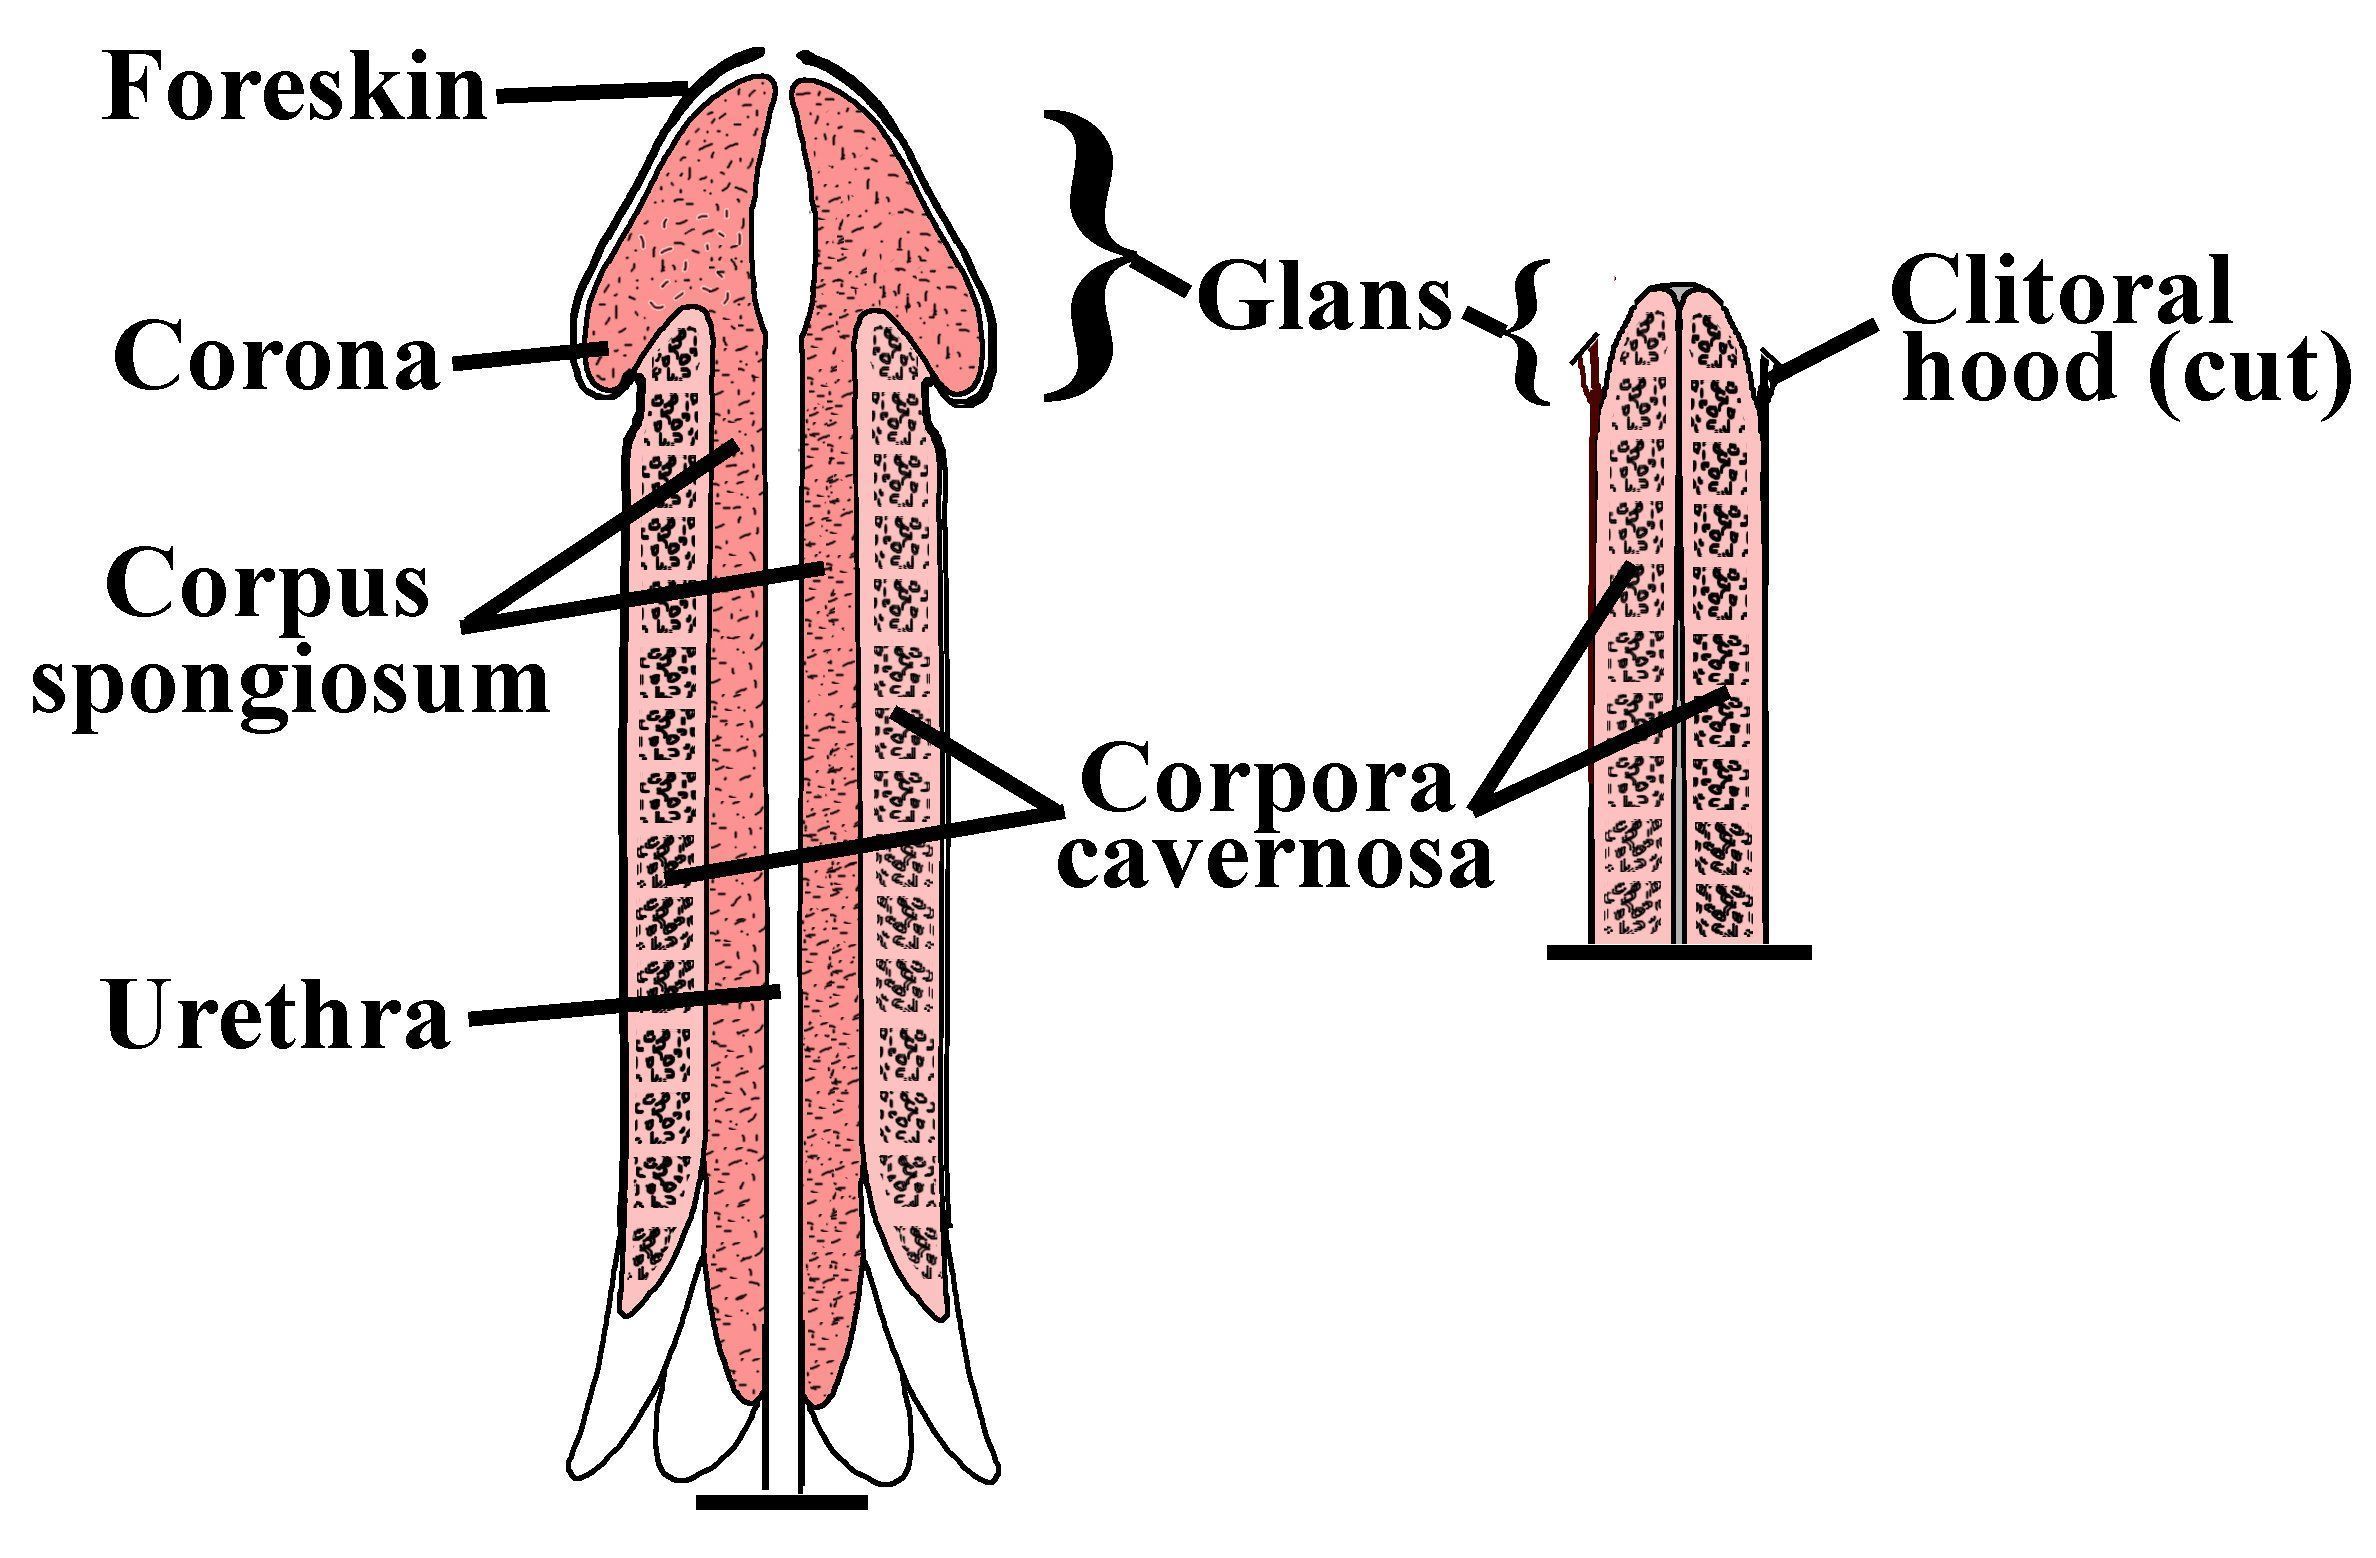 Clitoris pic structure